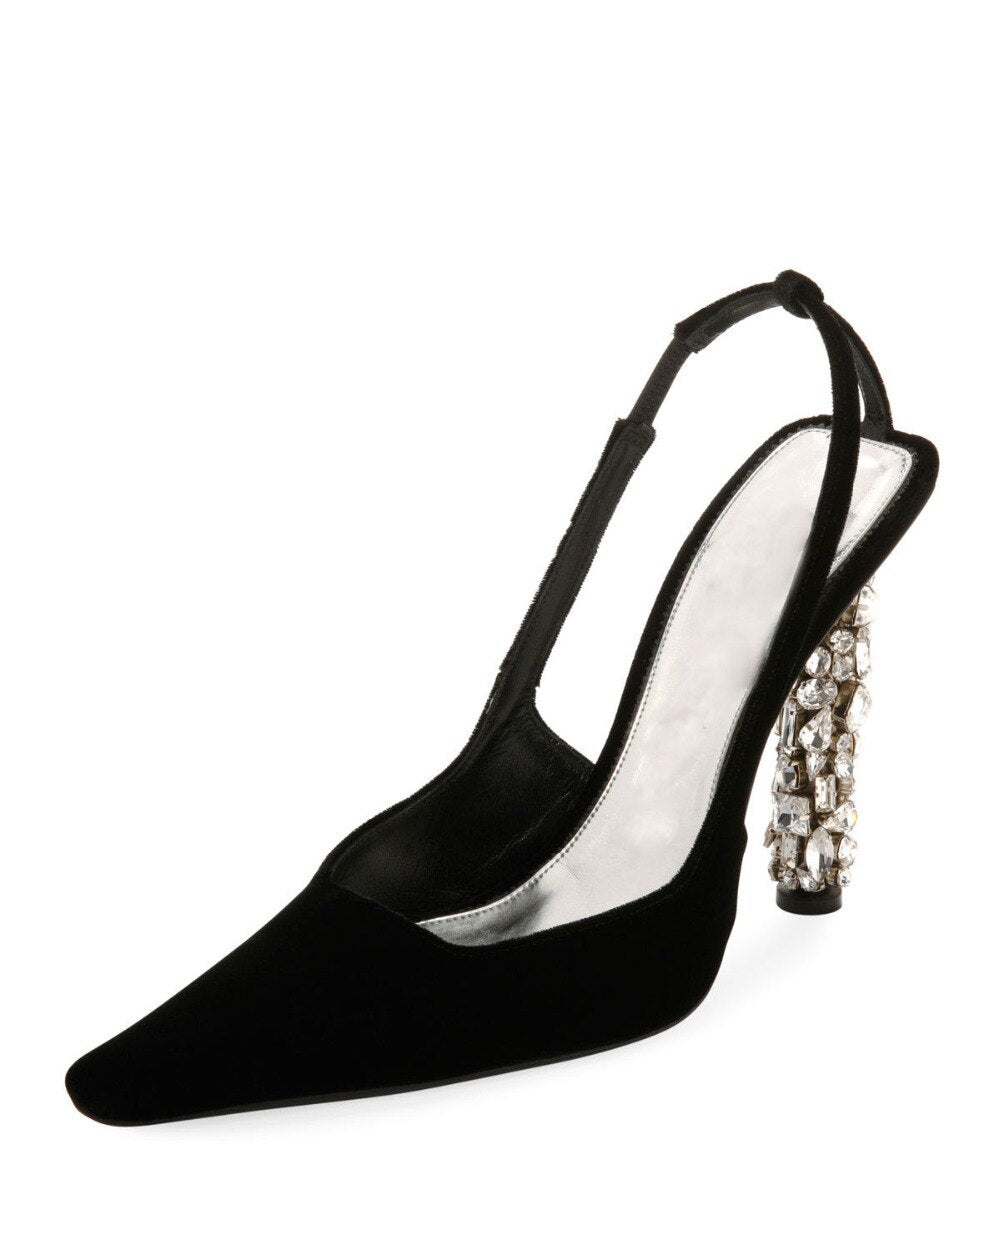 Velour Black Pointed Toe High Heel Shoes Crystal Pumps Designer Shoes Women